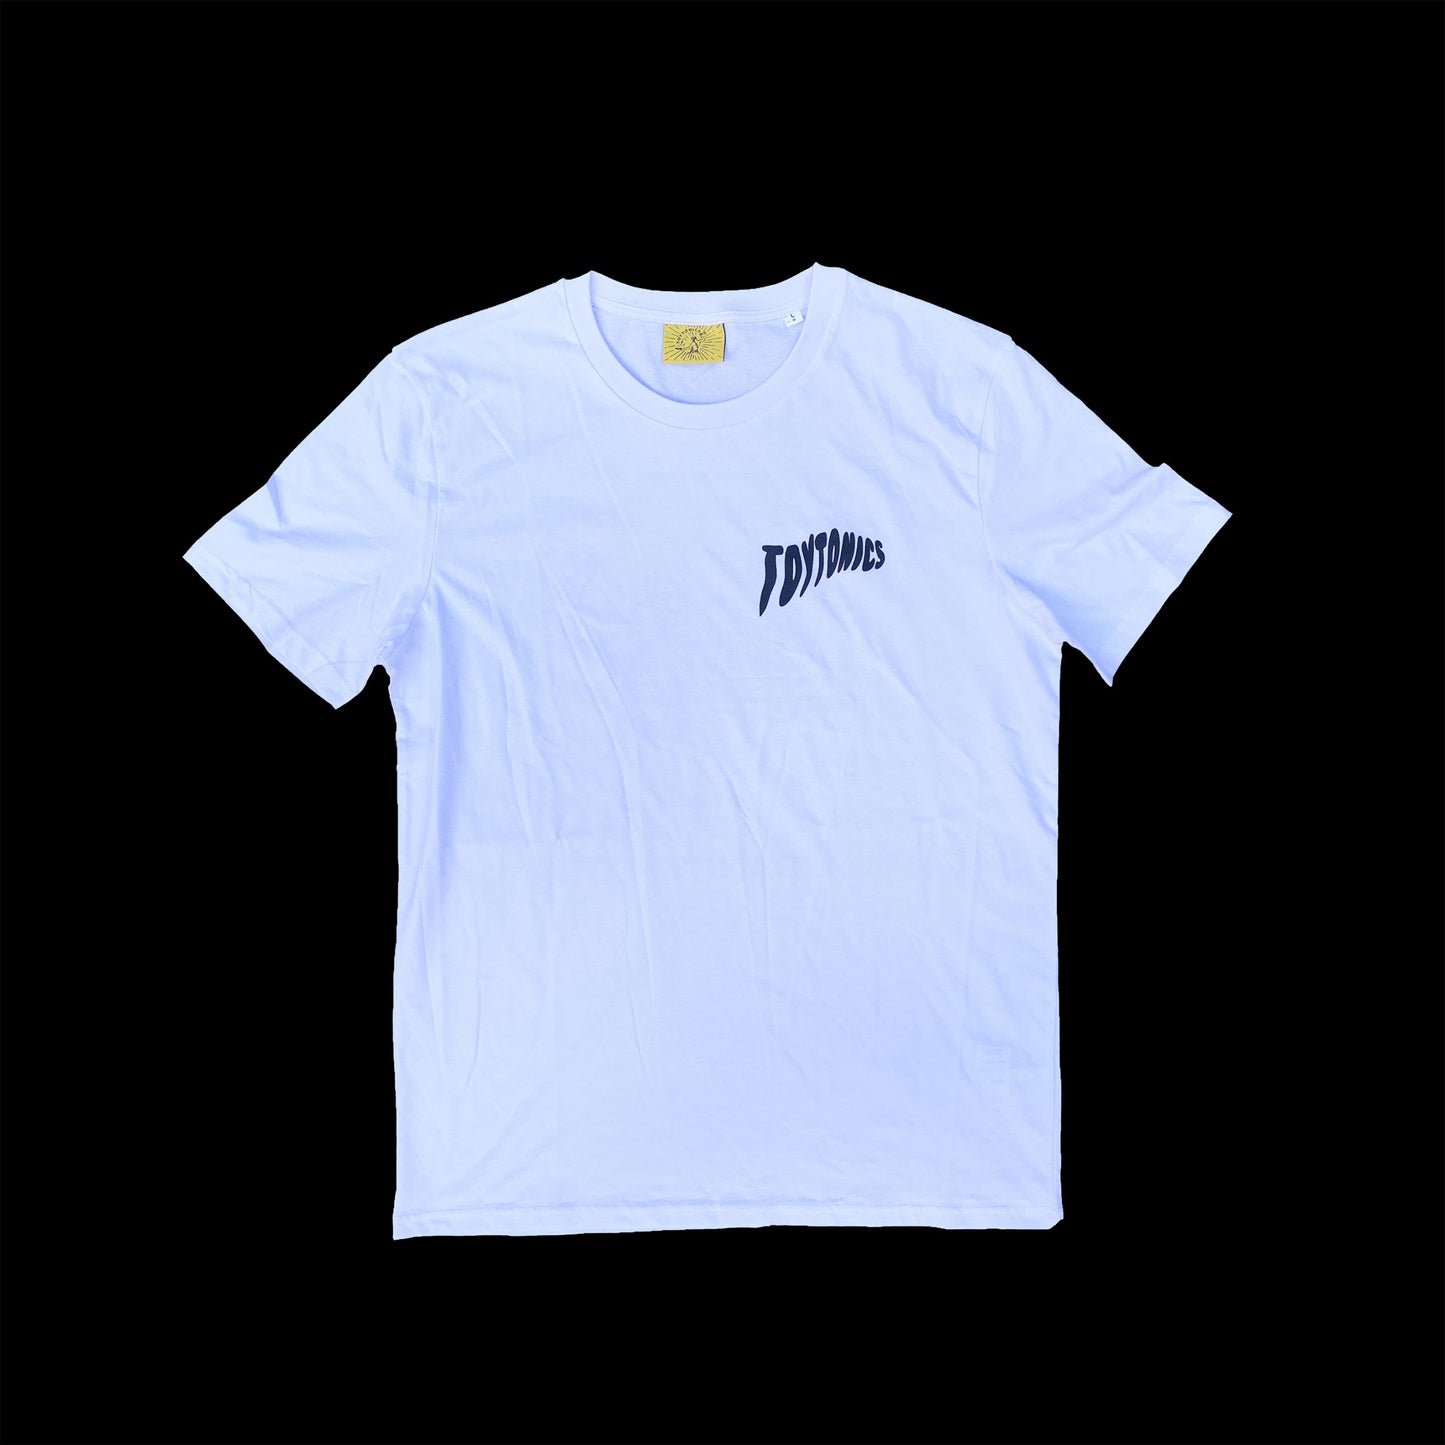 Dancefloor shirt - white – Limited to 150